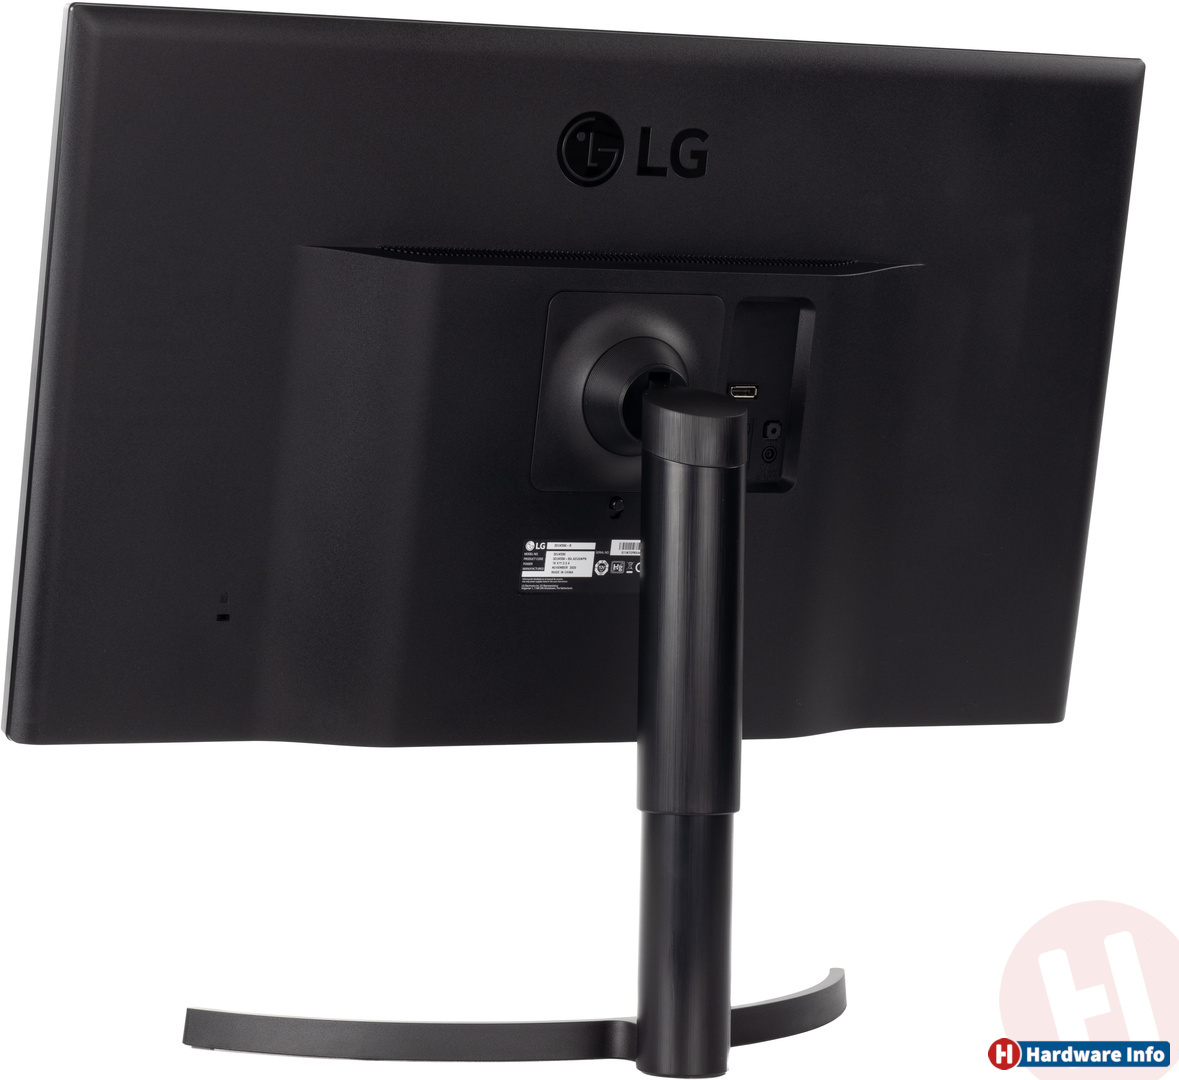 LG 32UK550-B monitor - Hardware Info